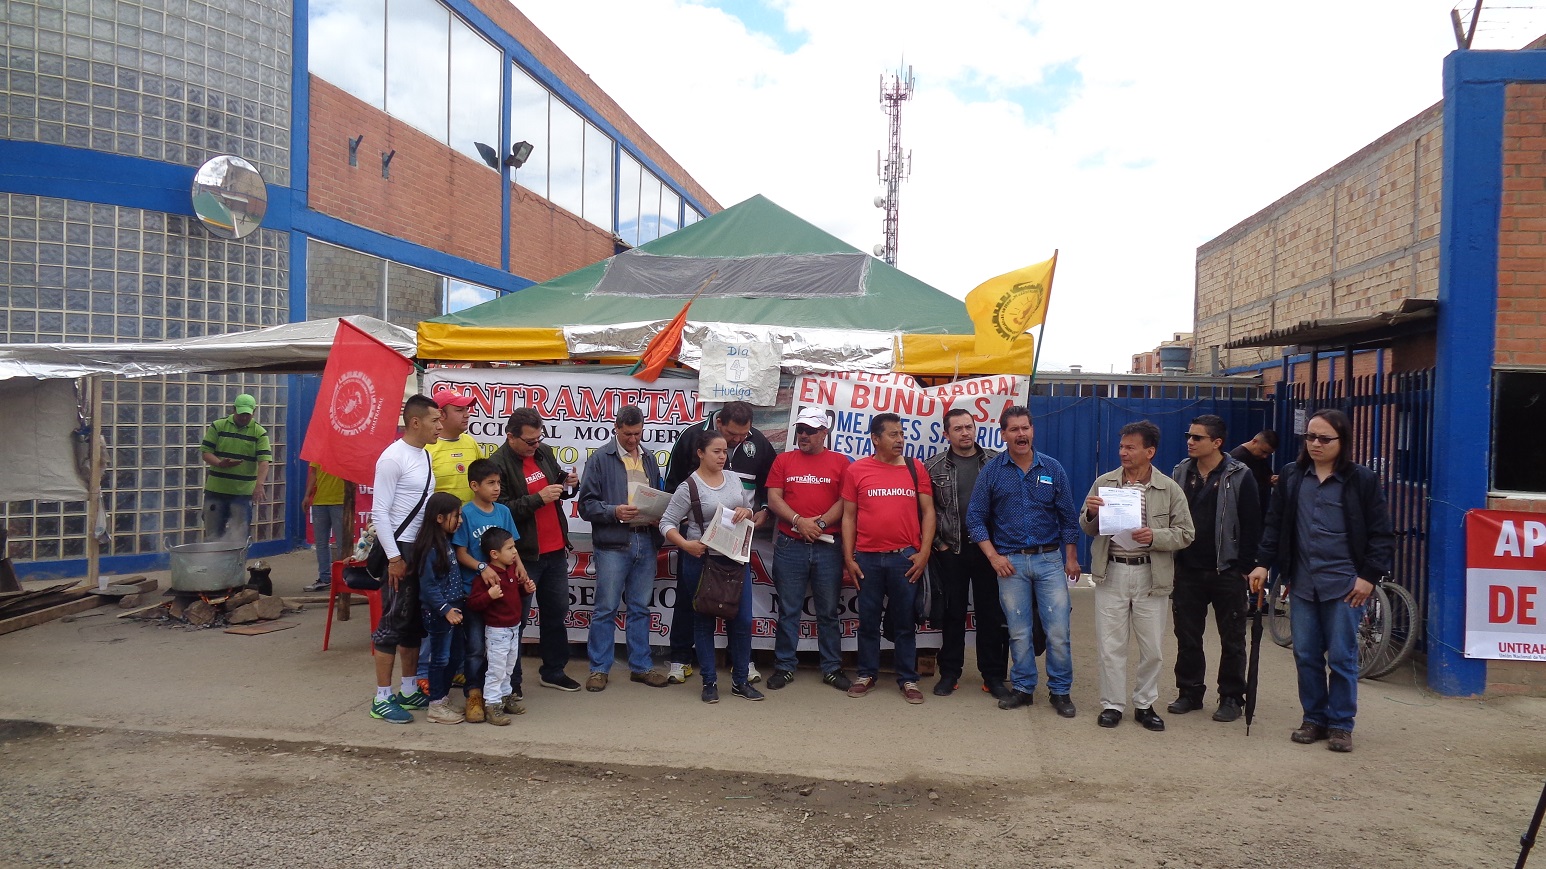 1546px x 869px - Triunfa huelga en Bundy â€“ PST-Colombia